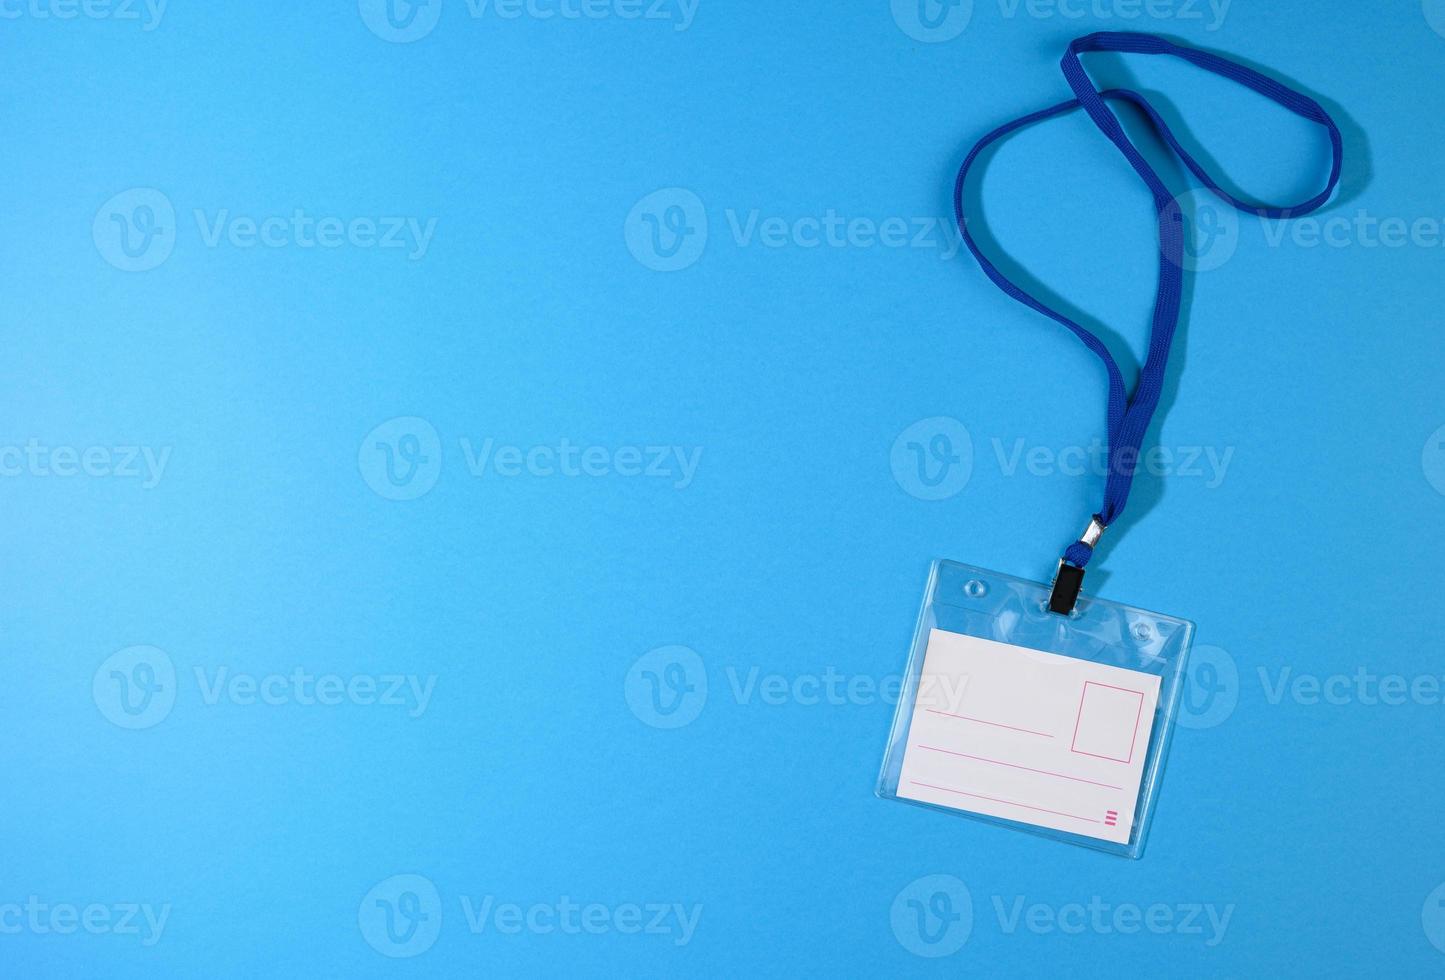 insignia de plástico transparente en un cordón azul sobre un fondo azul foto